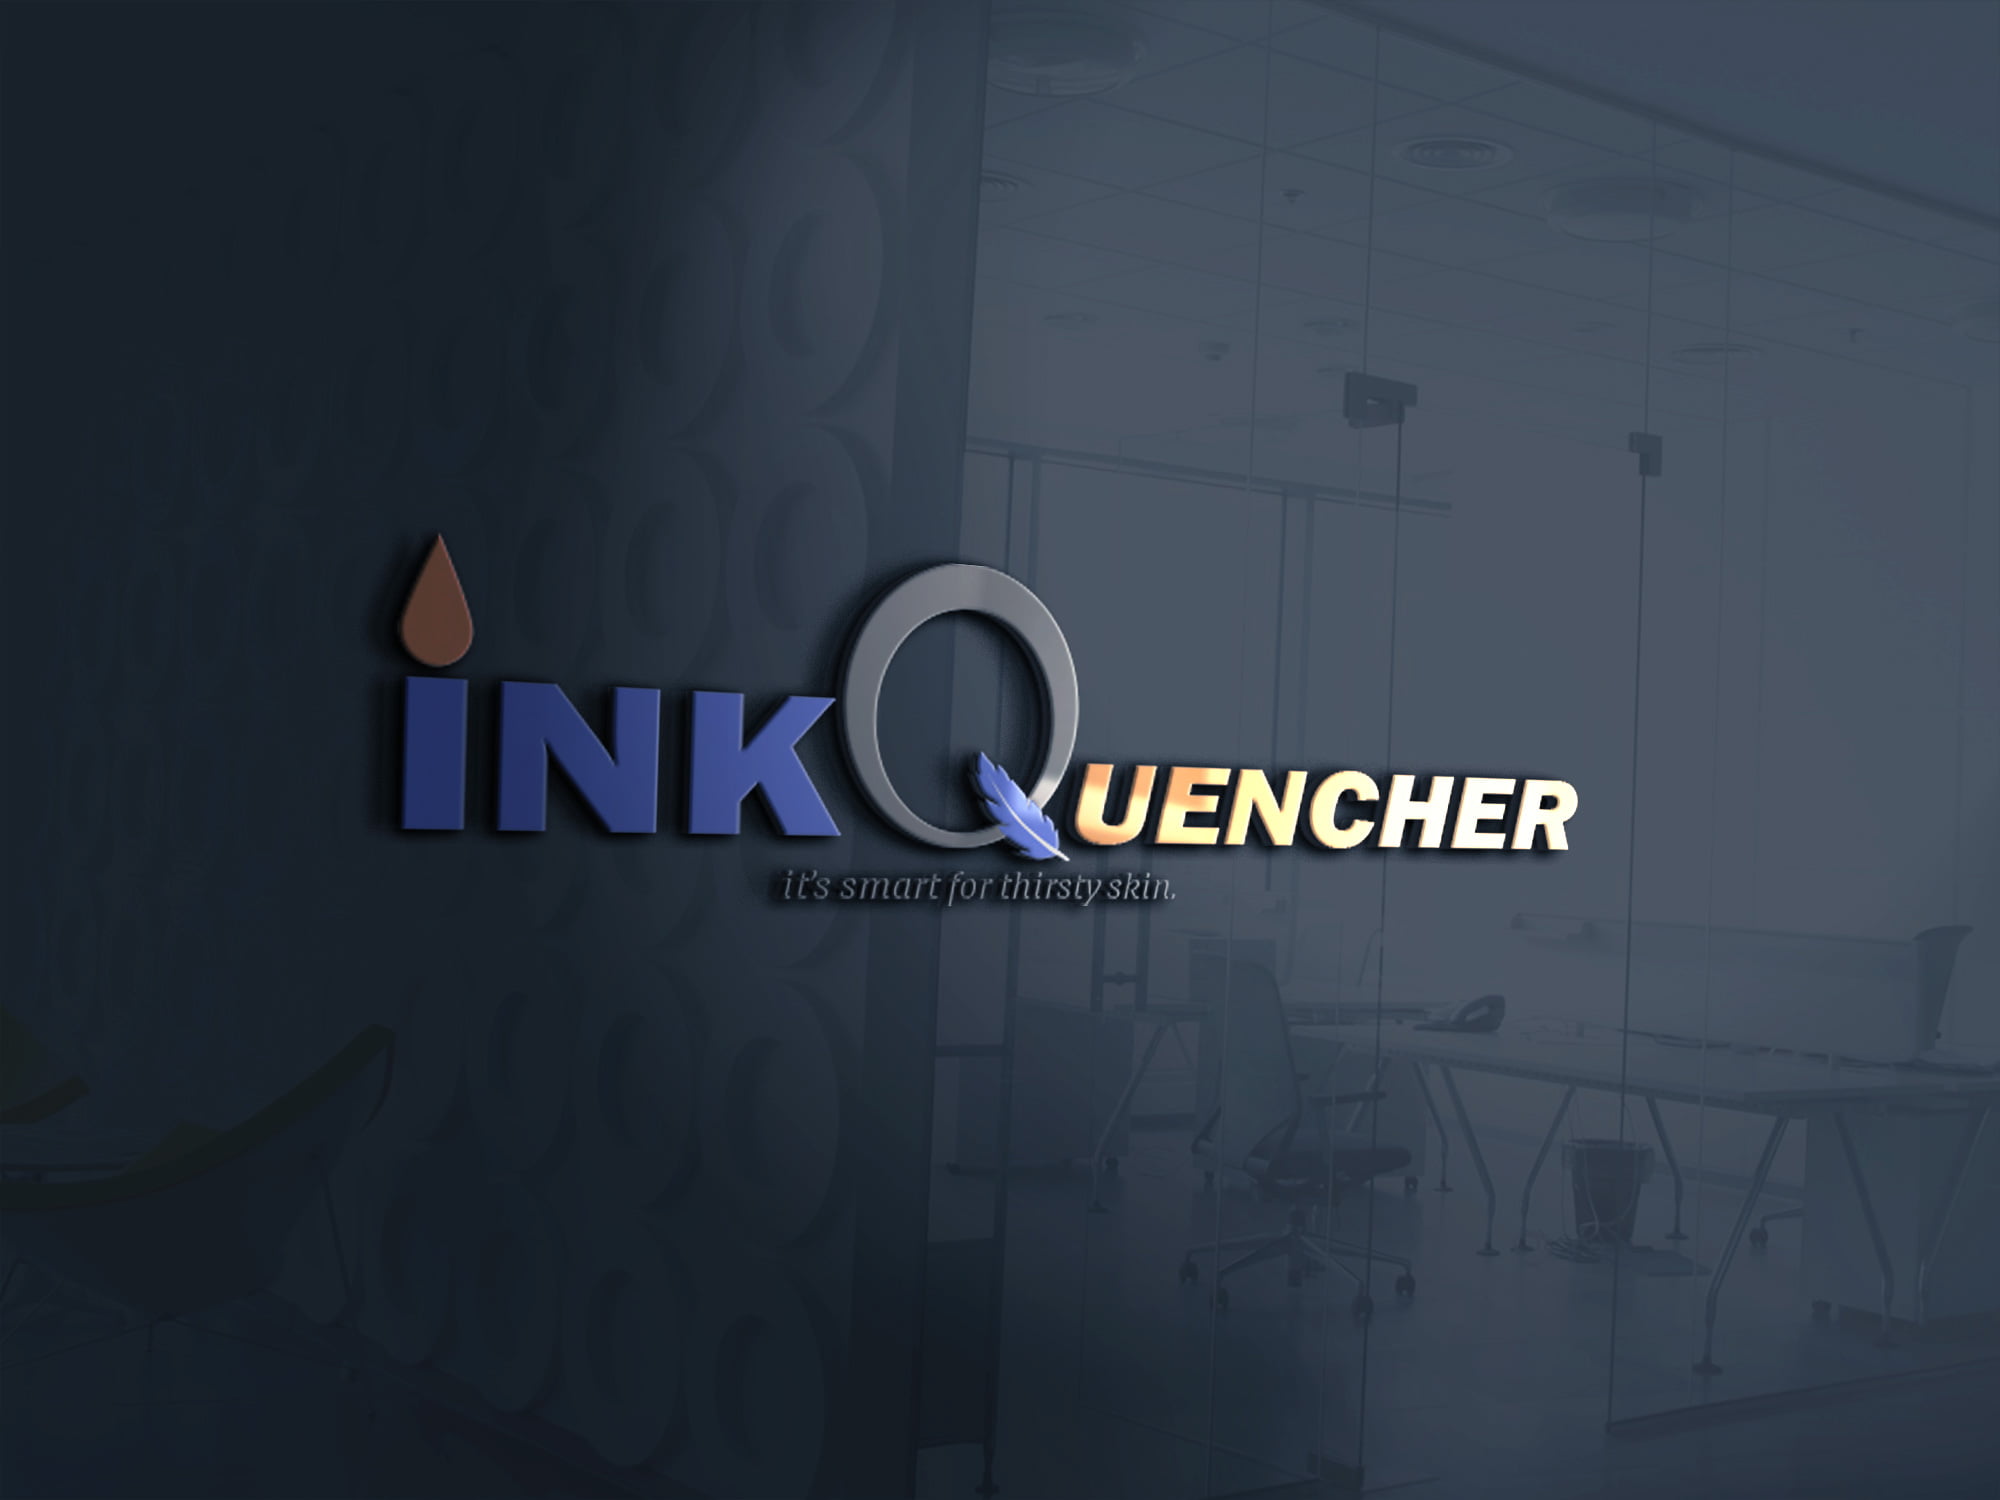 Ink quencher logo design